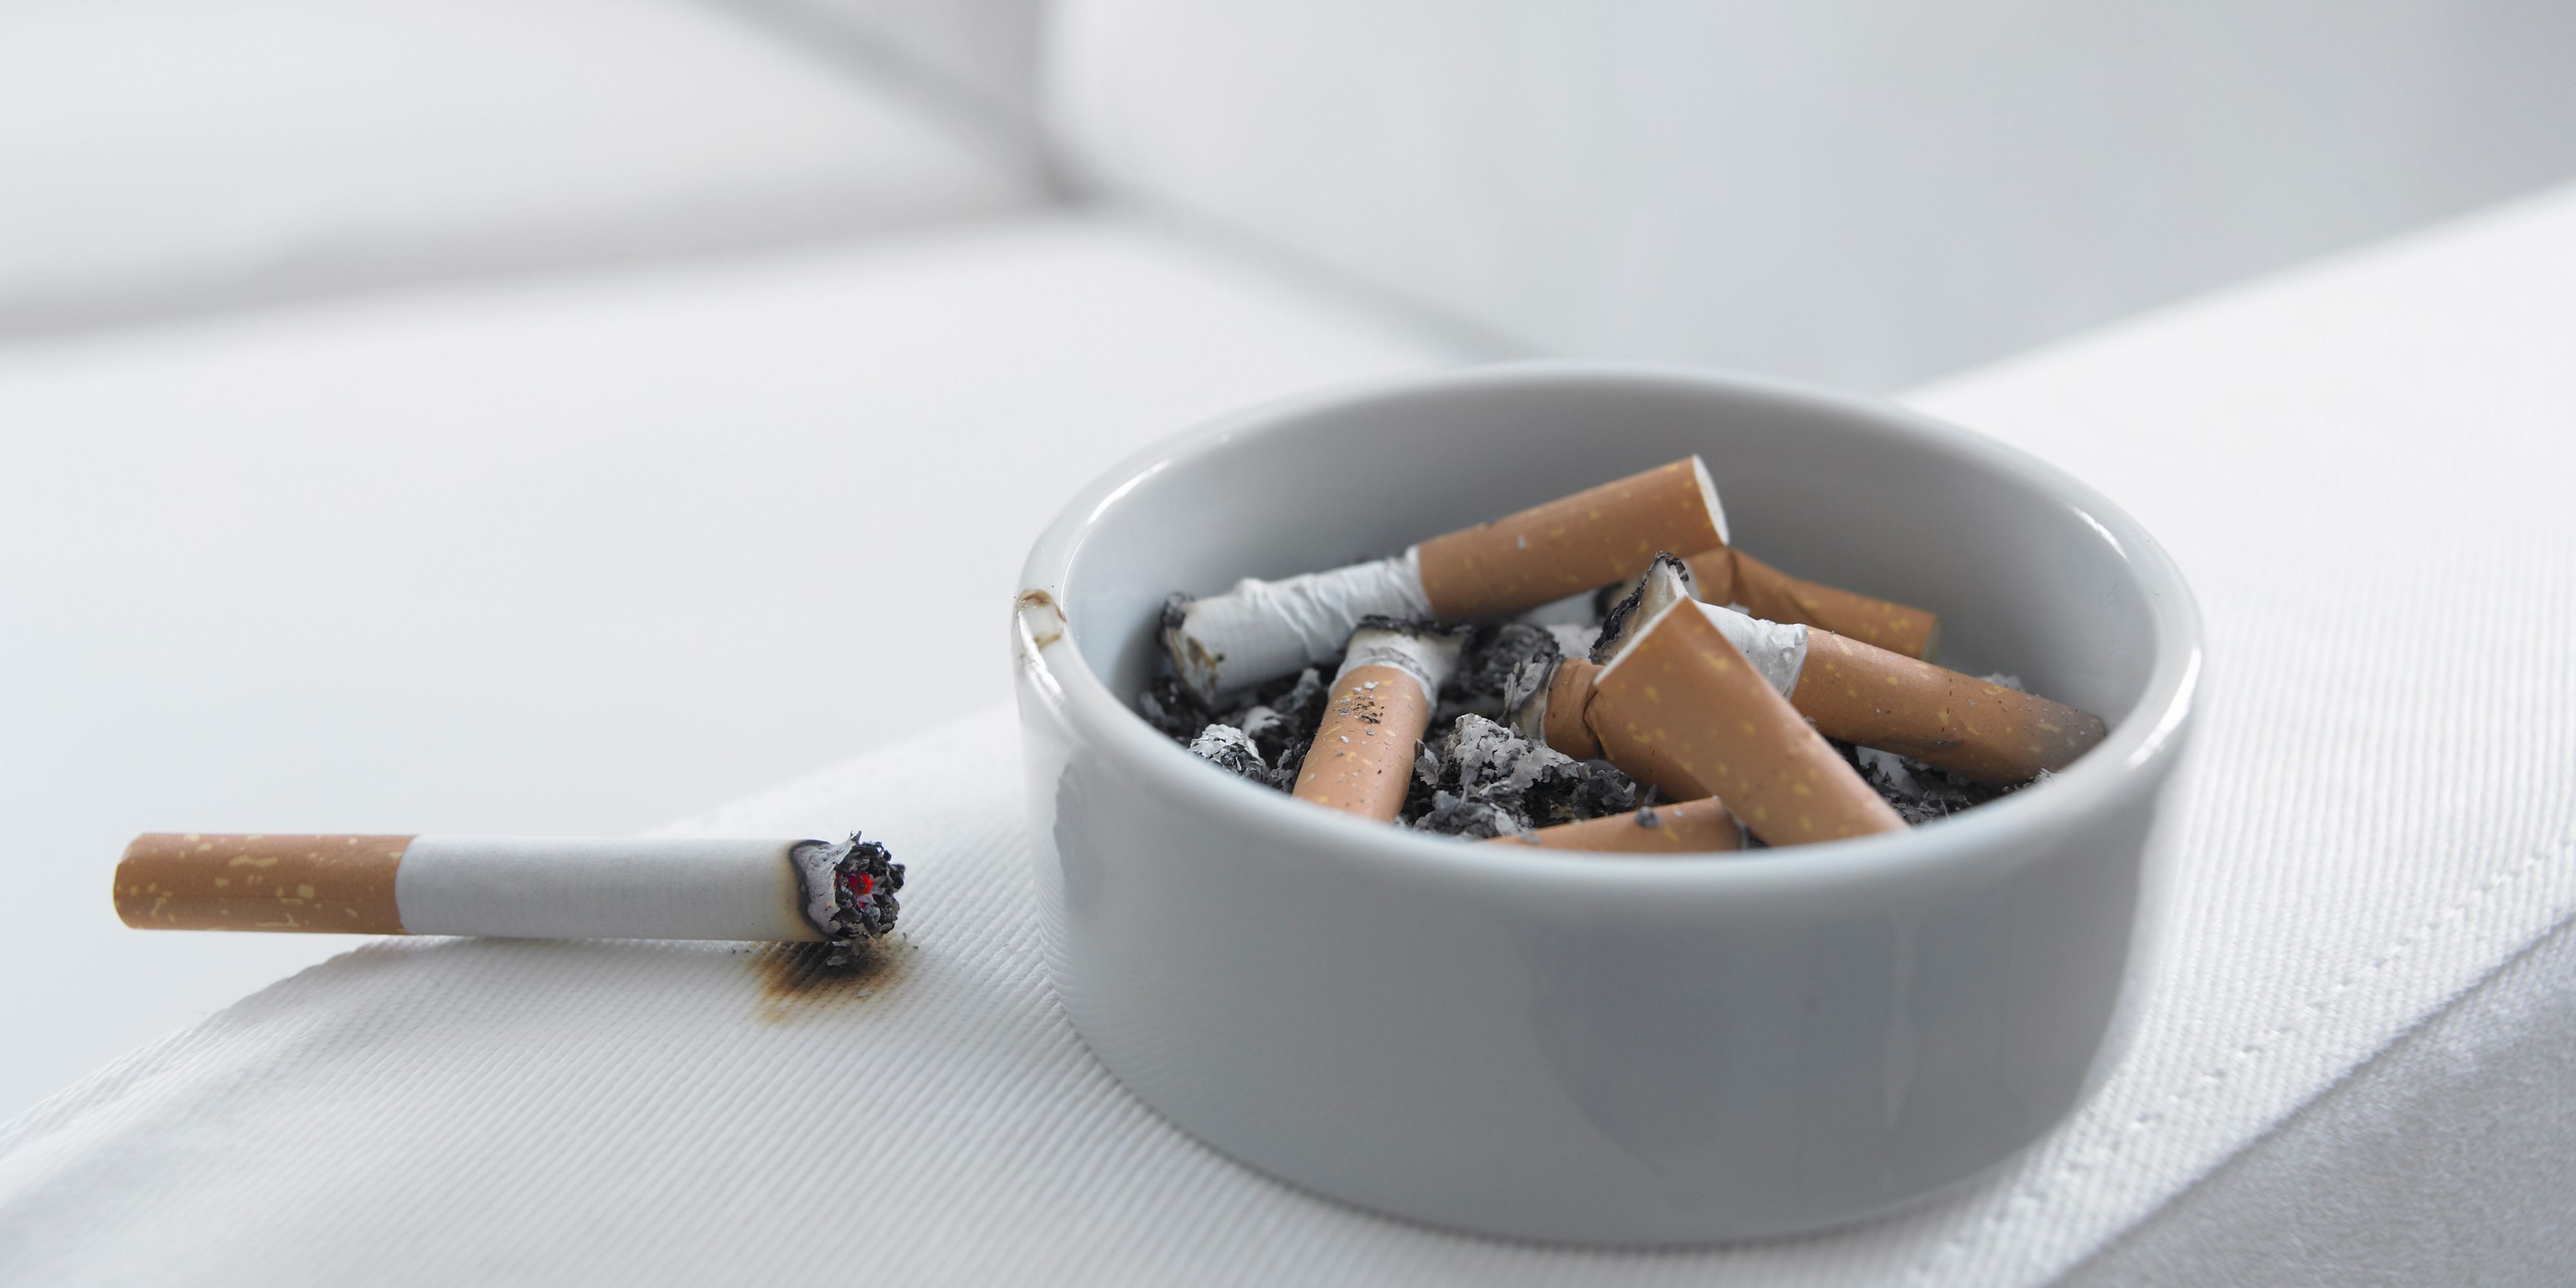 Nicorette 10mg 42 Cartridges Inhaler against Tobacco Dependence